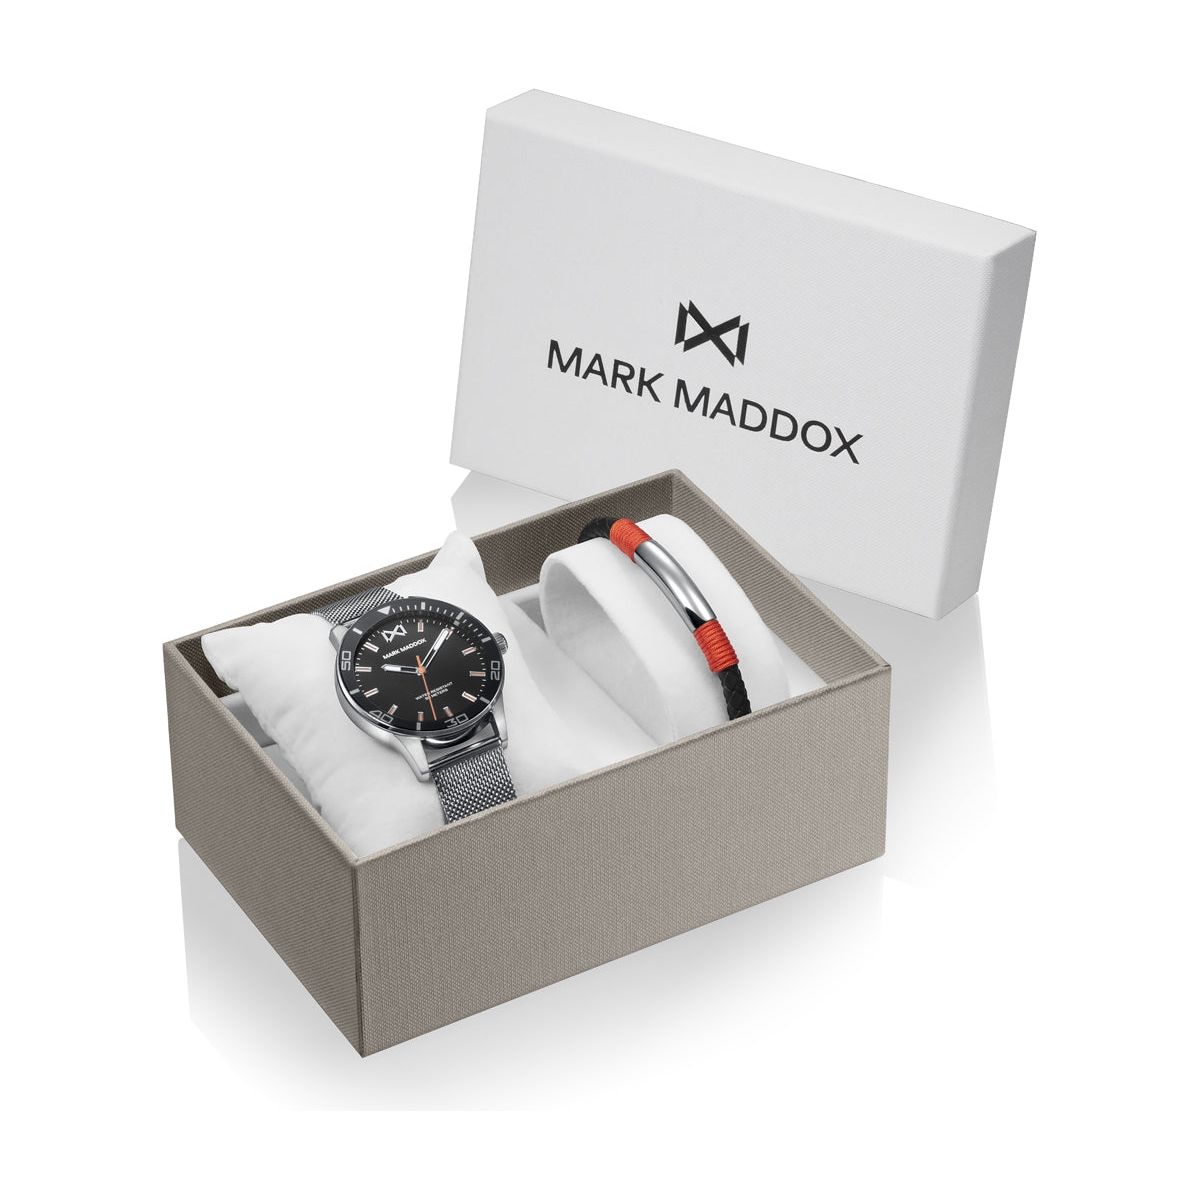 MARK MADDOX MARK MADDOX - NEW COLLECTION Mod. HM7146-57 WATCHES mark-maddox-new-collection-mod-hm7146-57